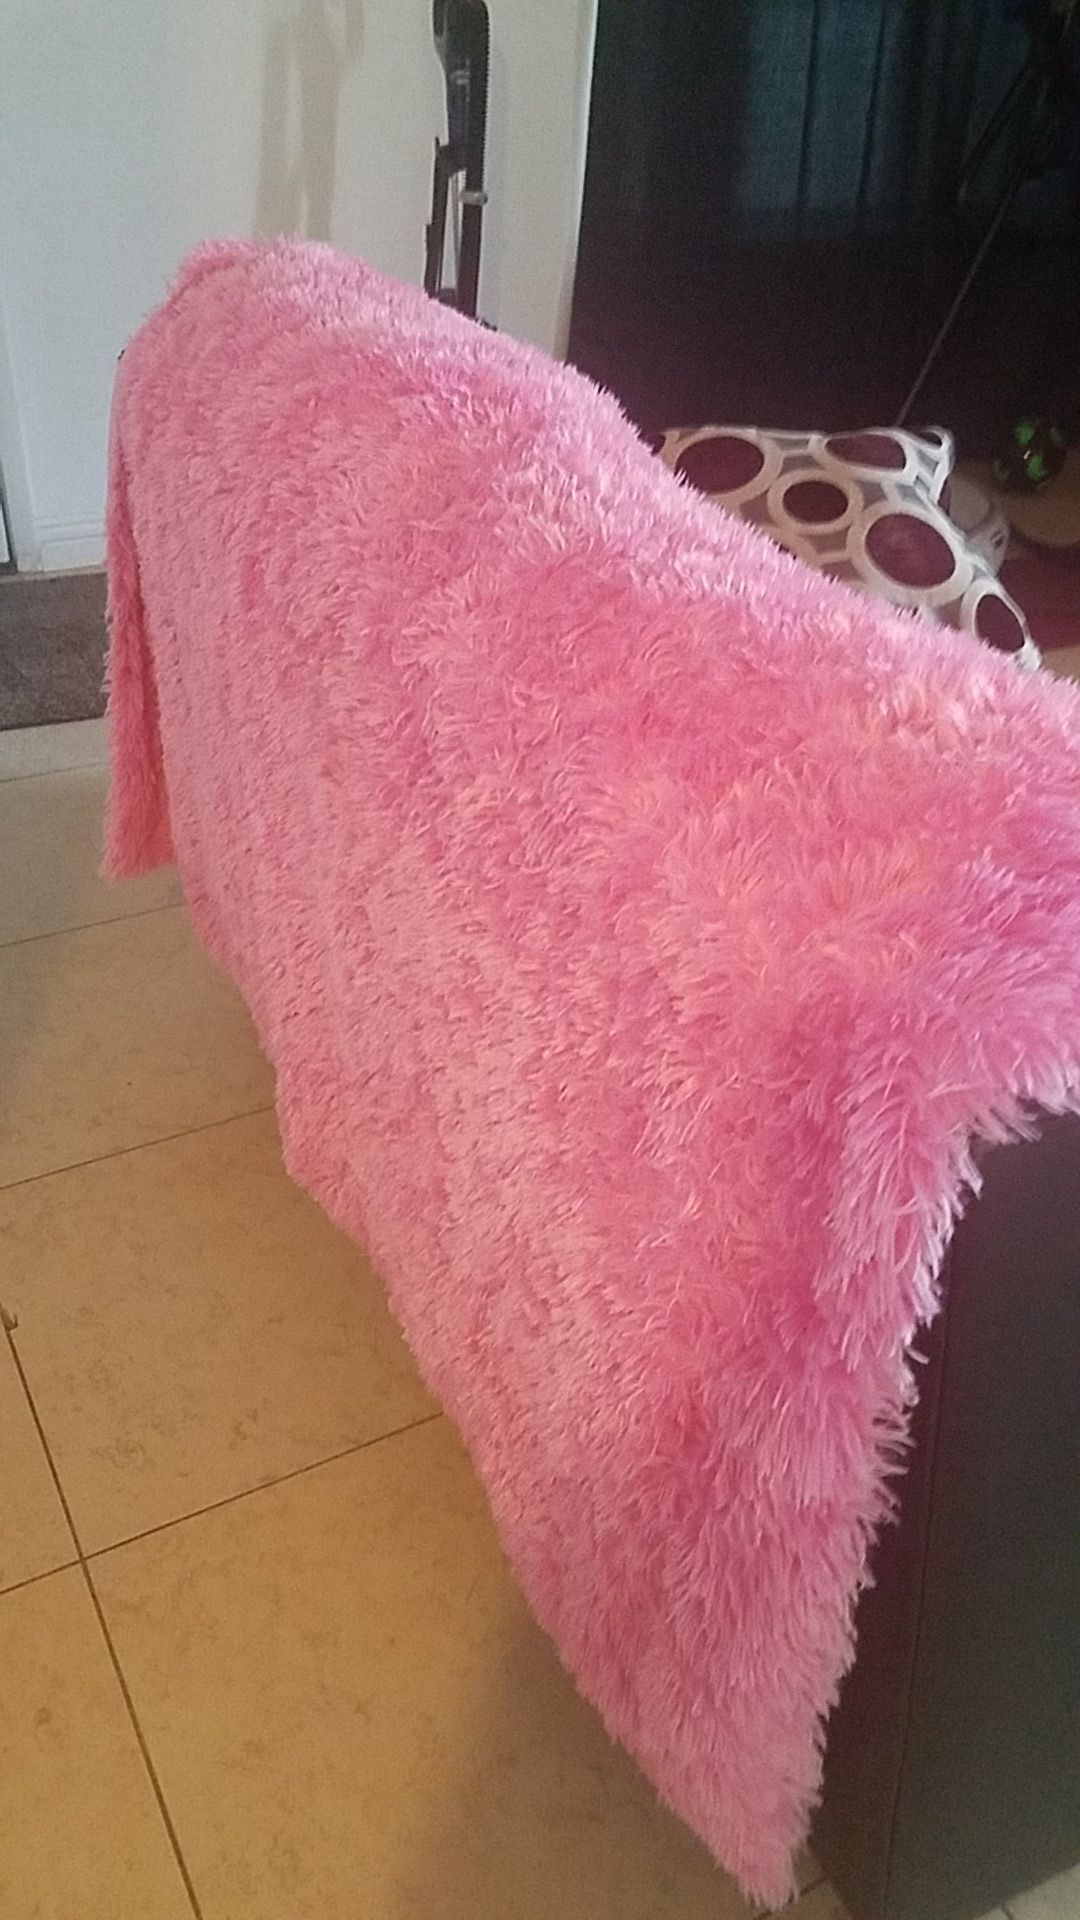 Pink fuzzy throw blanket